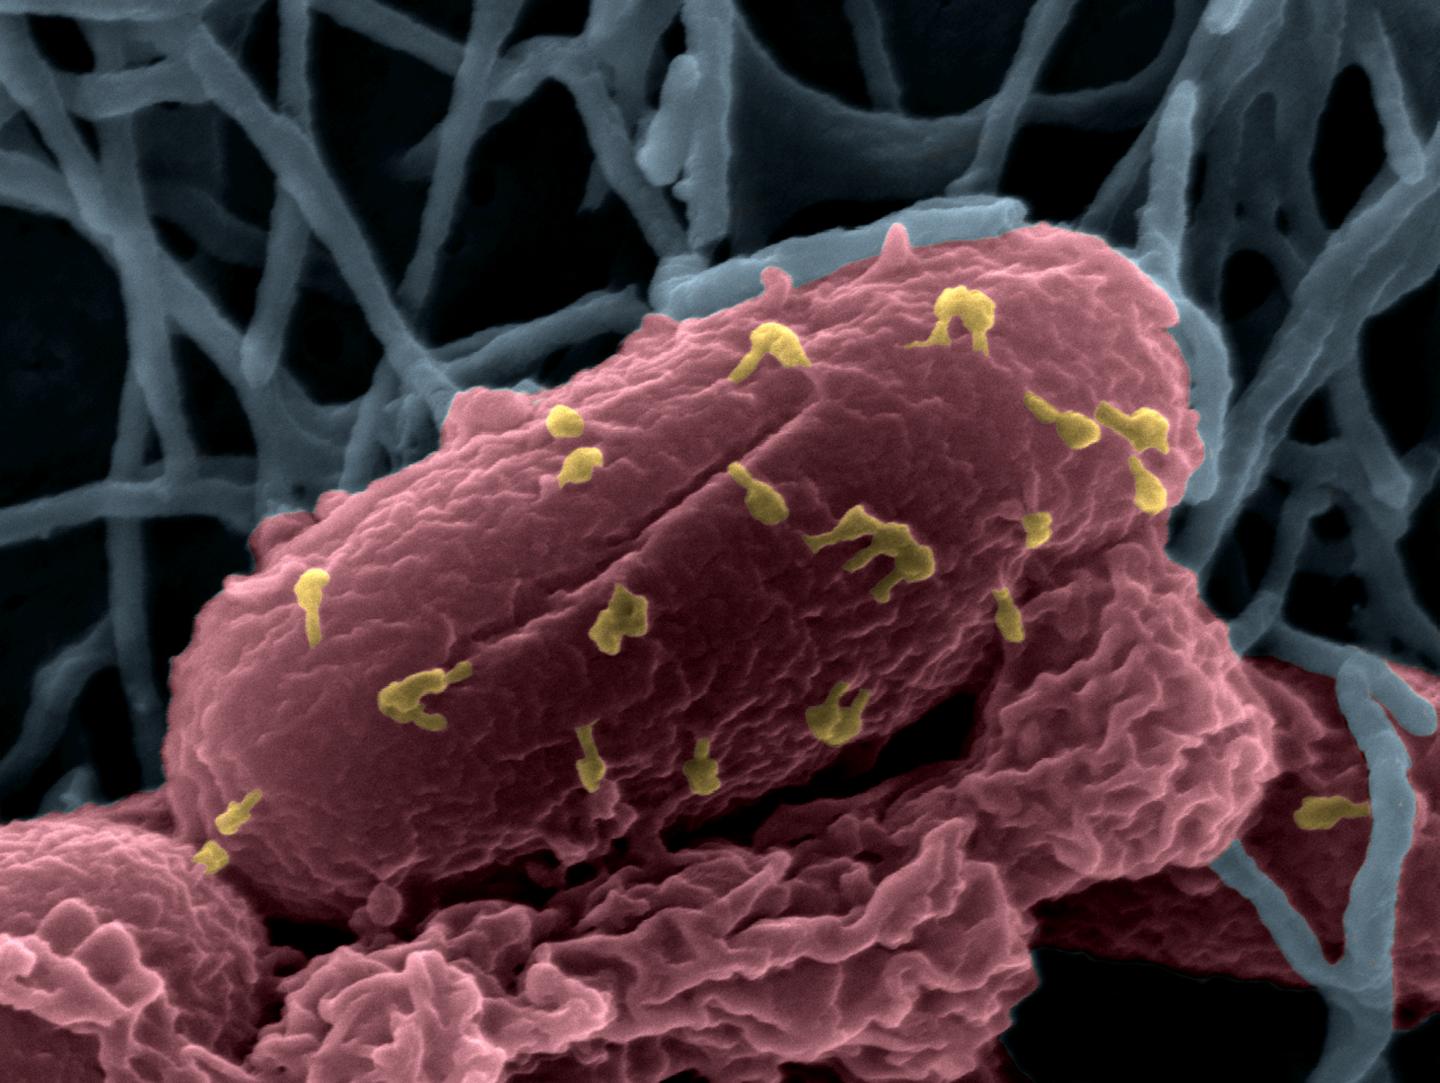 Bacteriophages on the Escherichia coli bacterium